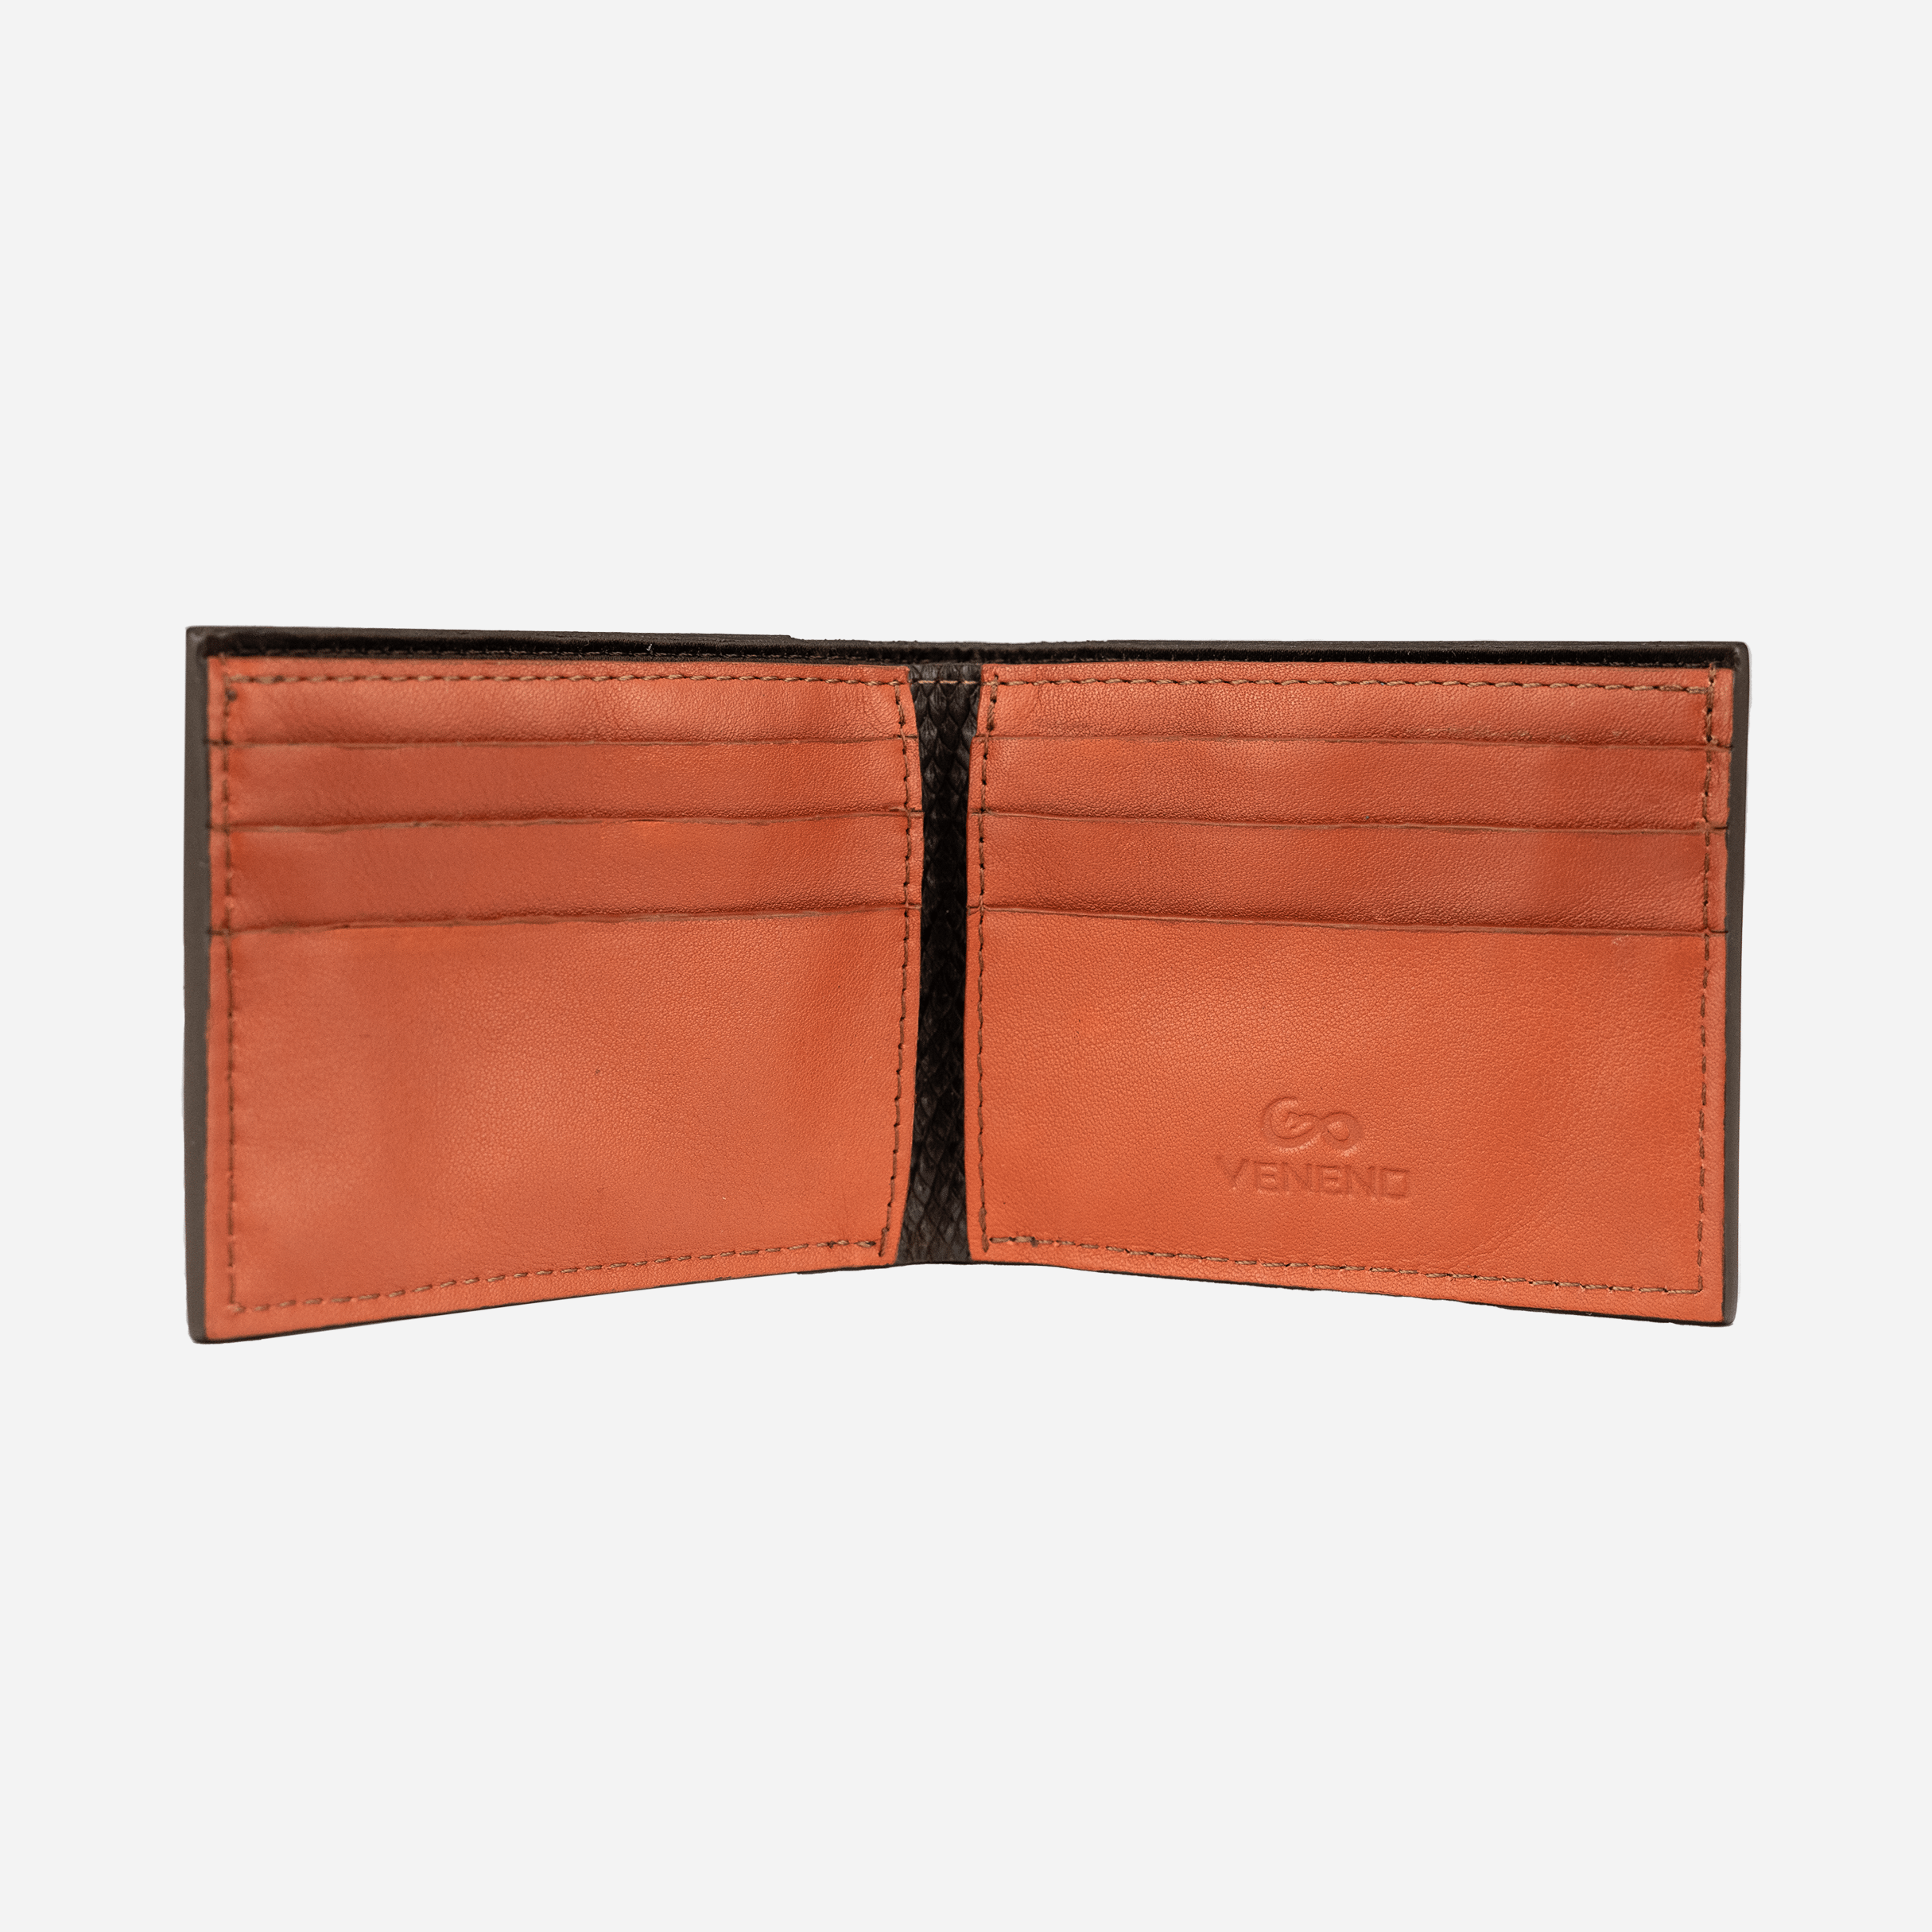 Veneno Leather Goods "The Heat" Oragen Sunset